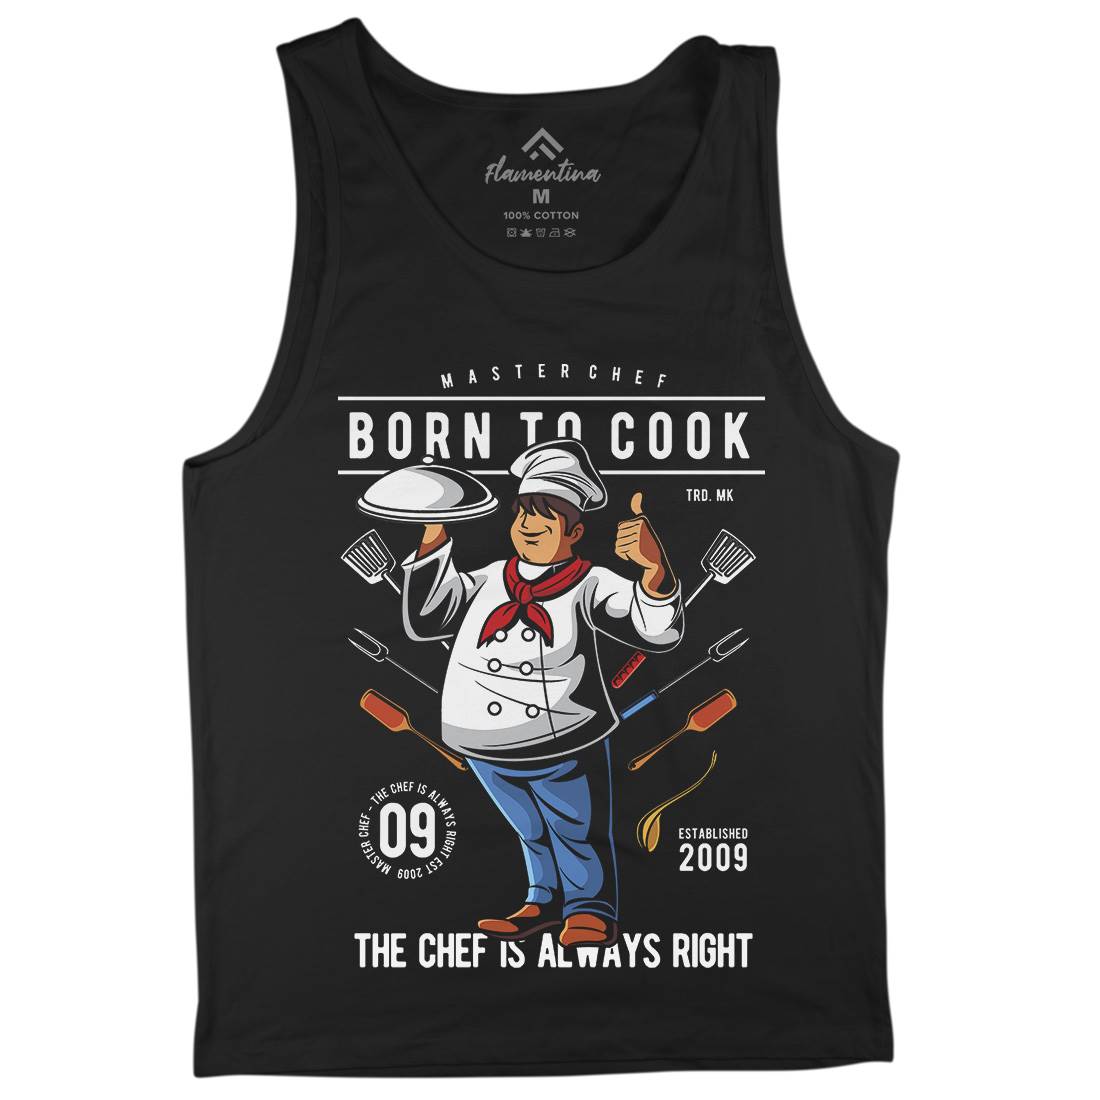 Born To Cook Mens Tank Top Vest Work C322